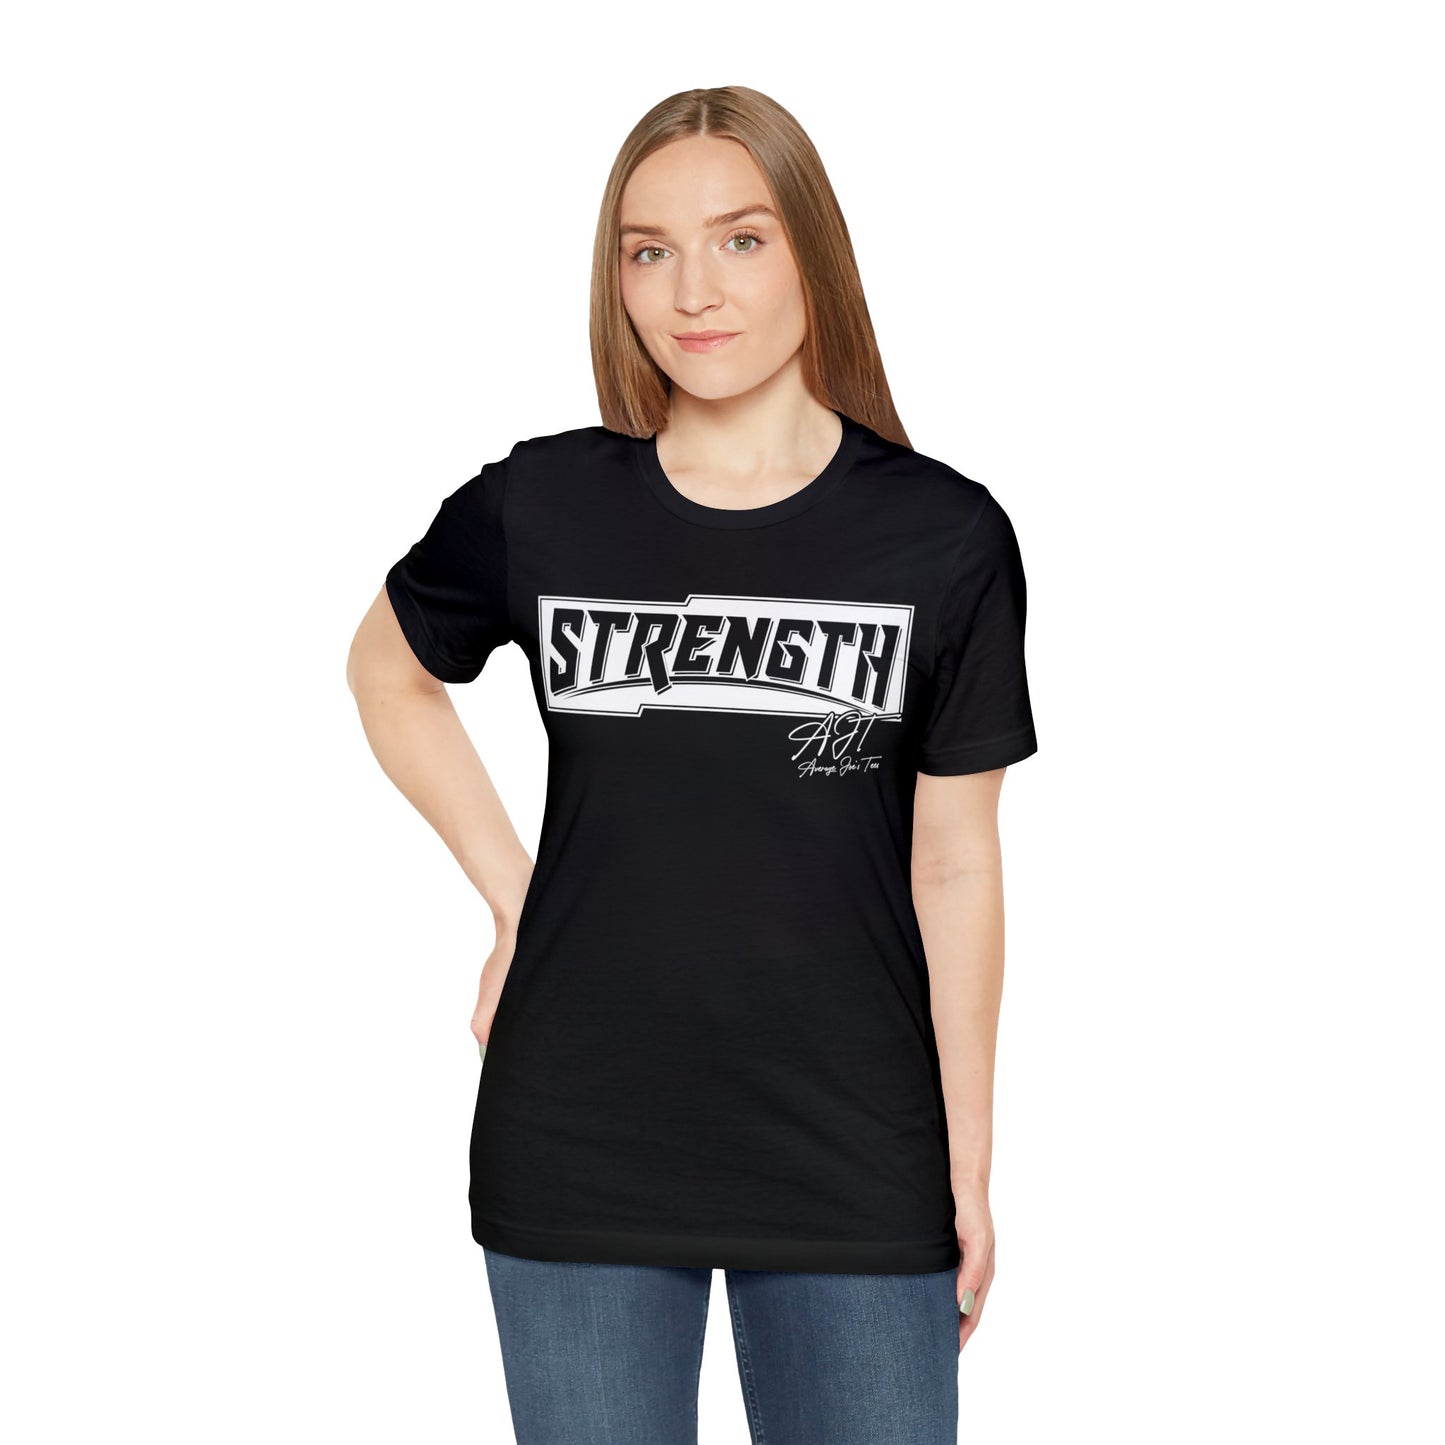 "Strength" Short Sleeve Tee